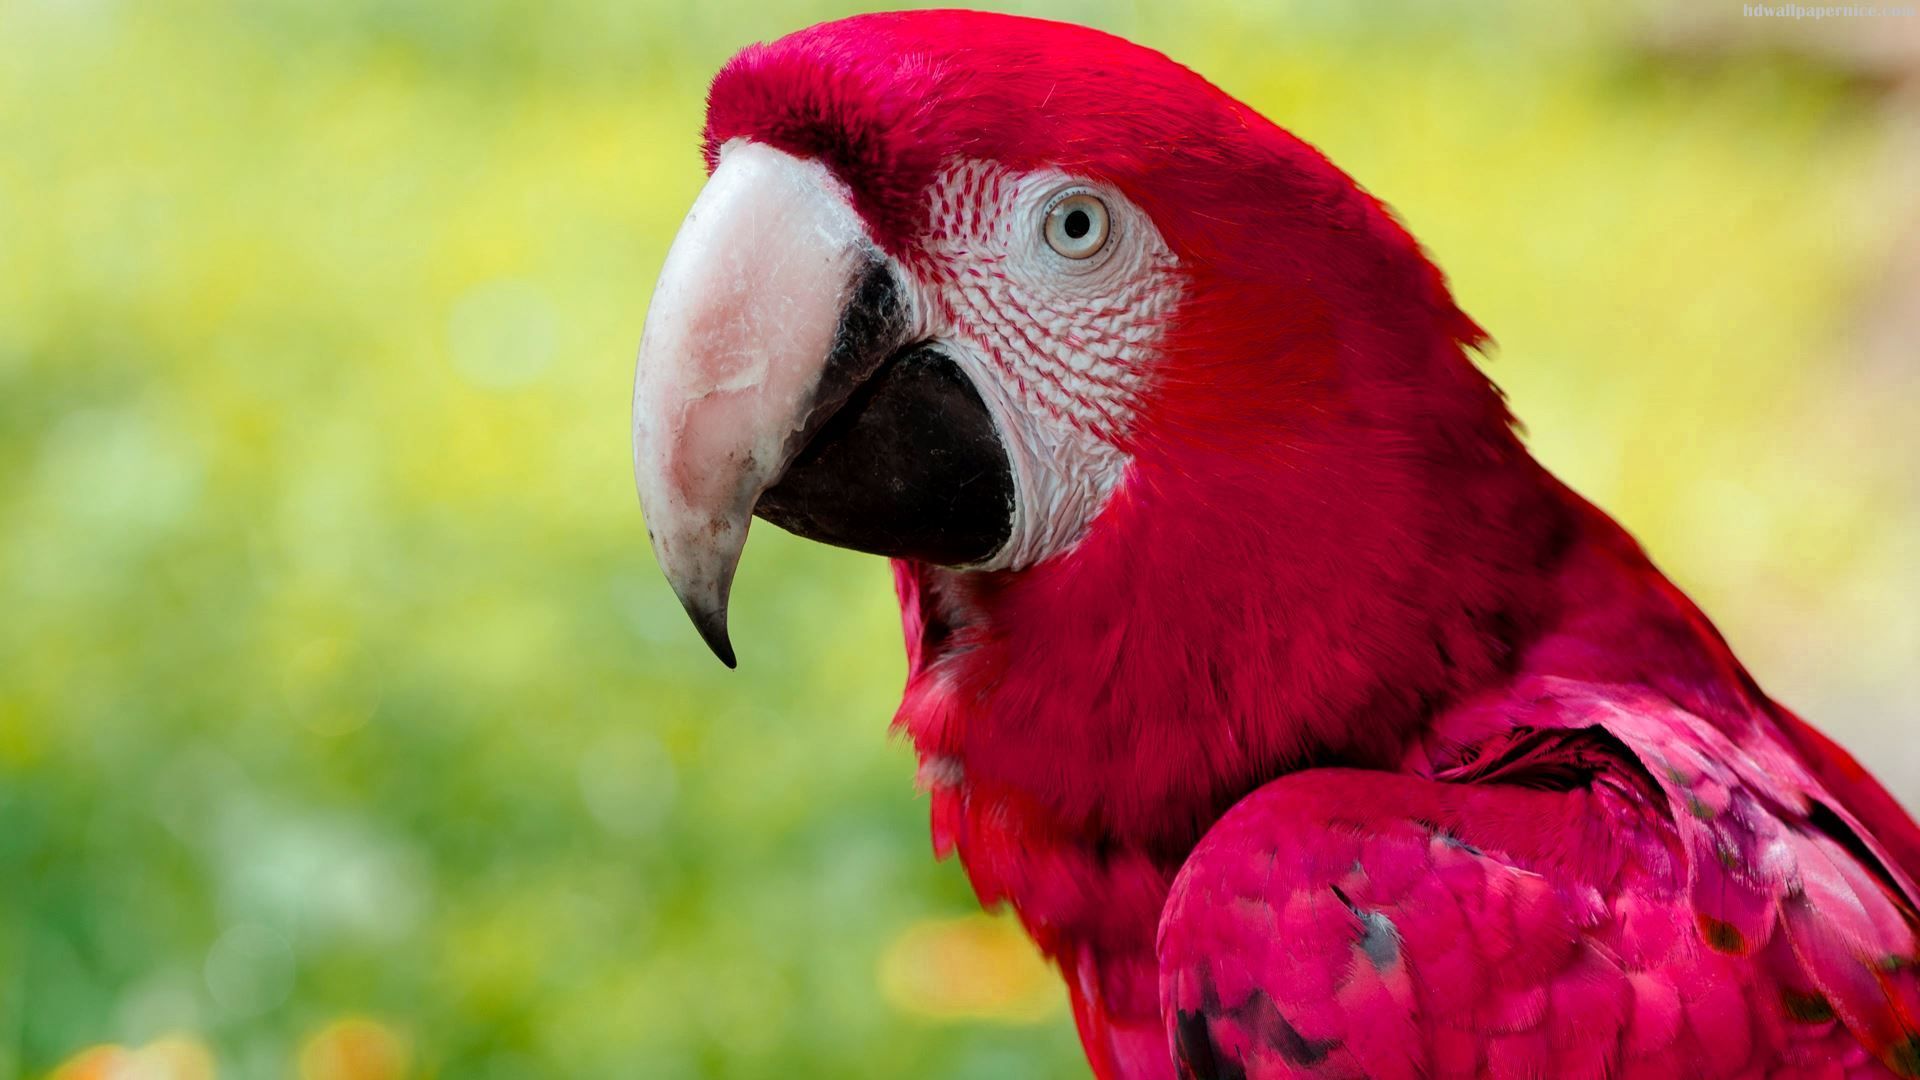 Red Scarlet Macaw Bird HD Wallpaper .wallpaperpick.com